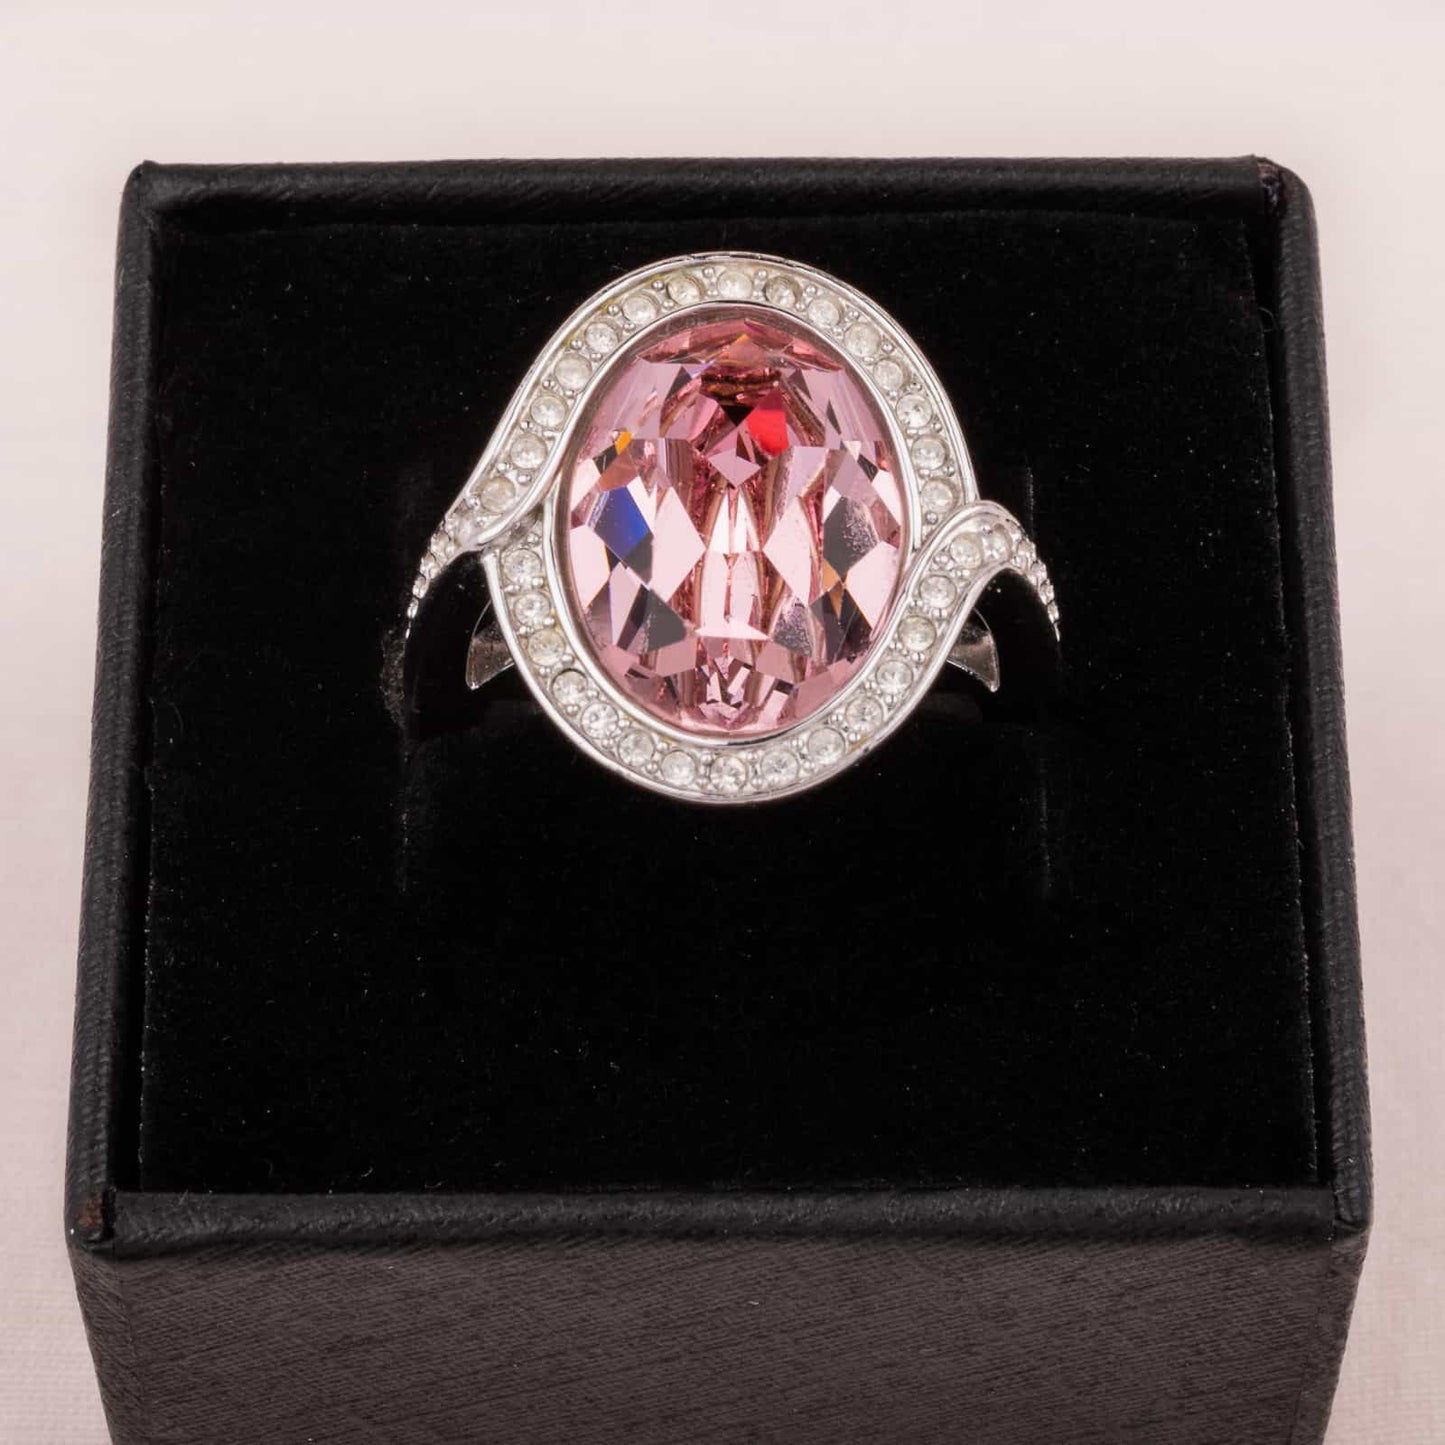 SWAROVSKI ring with pink crystal – Find Vintage Beauty